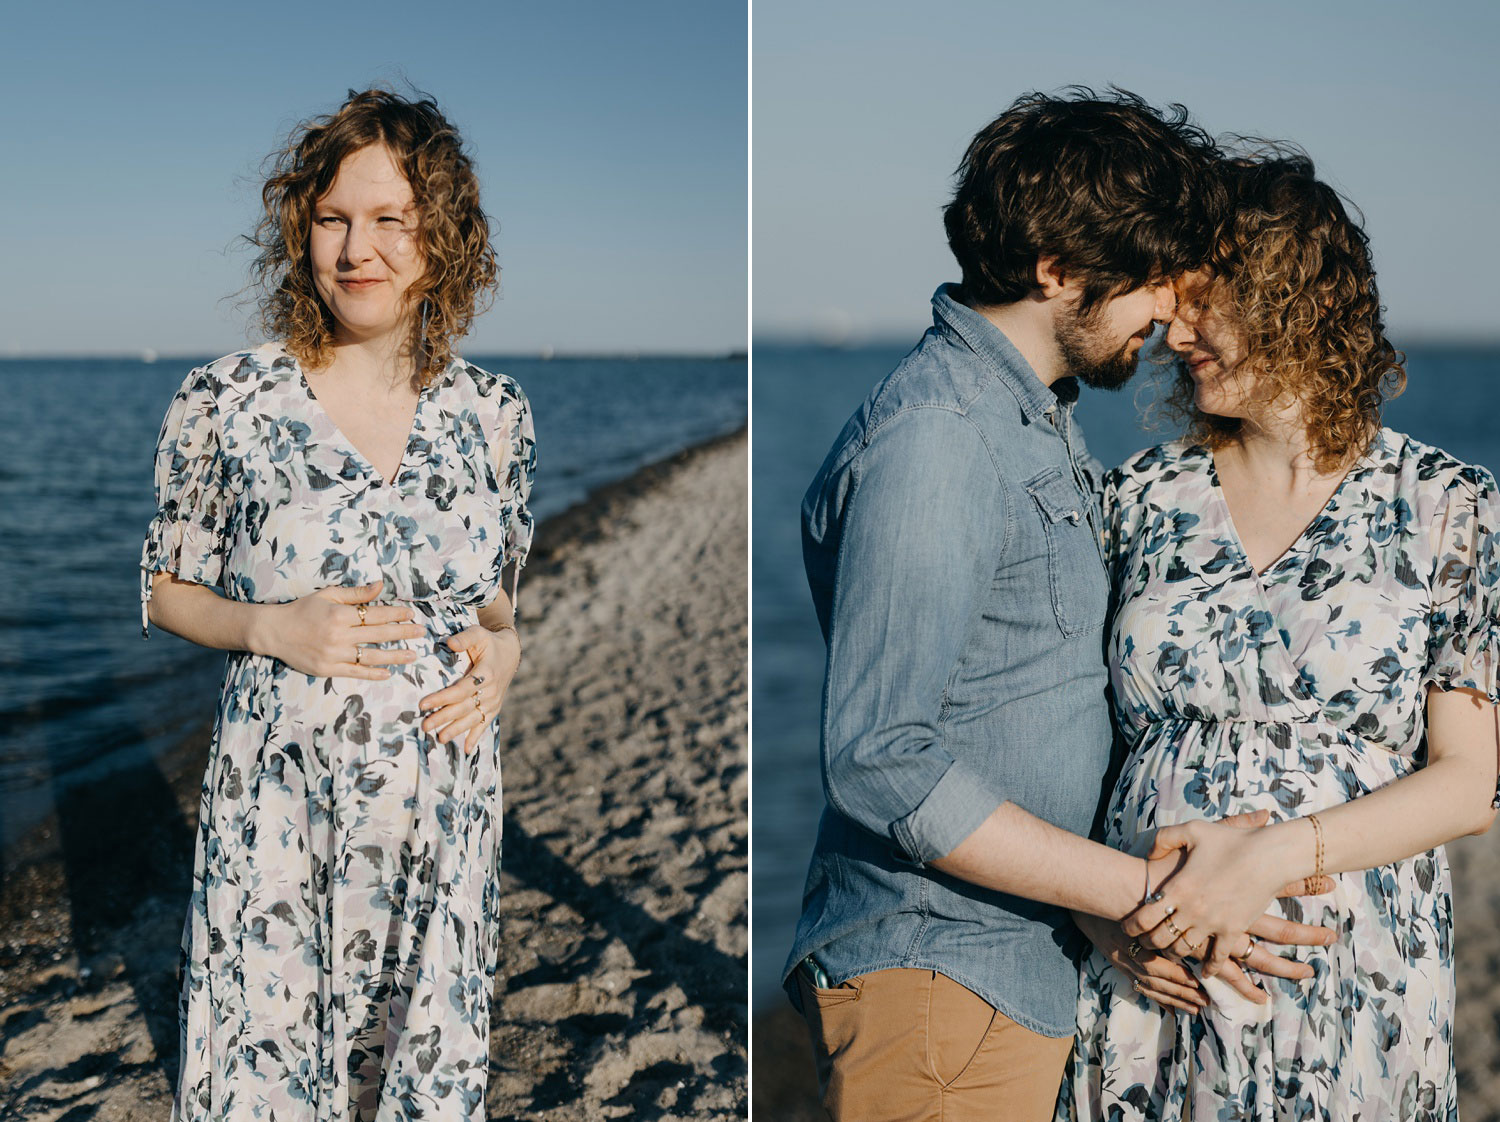 Pregnant woman embracing her baby bump at Copenhagen beach